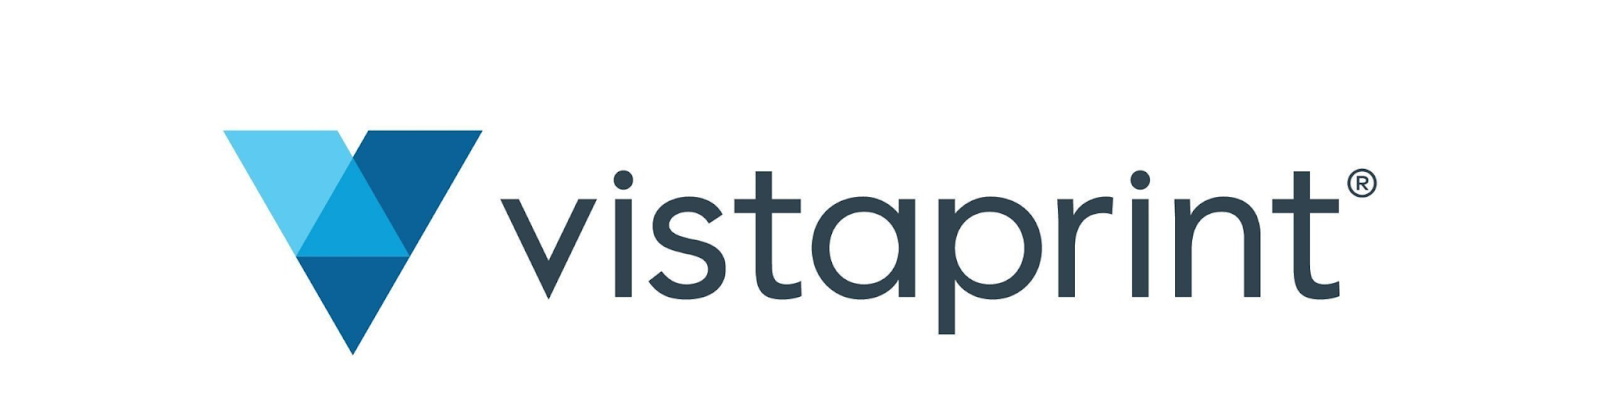 Vistaprint logo - gift list